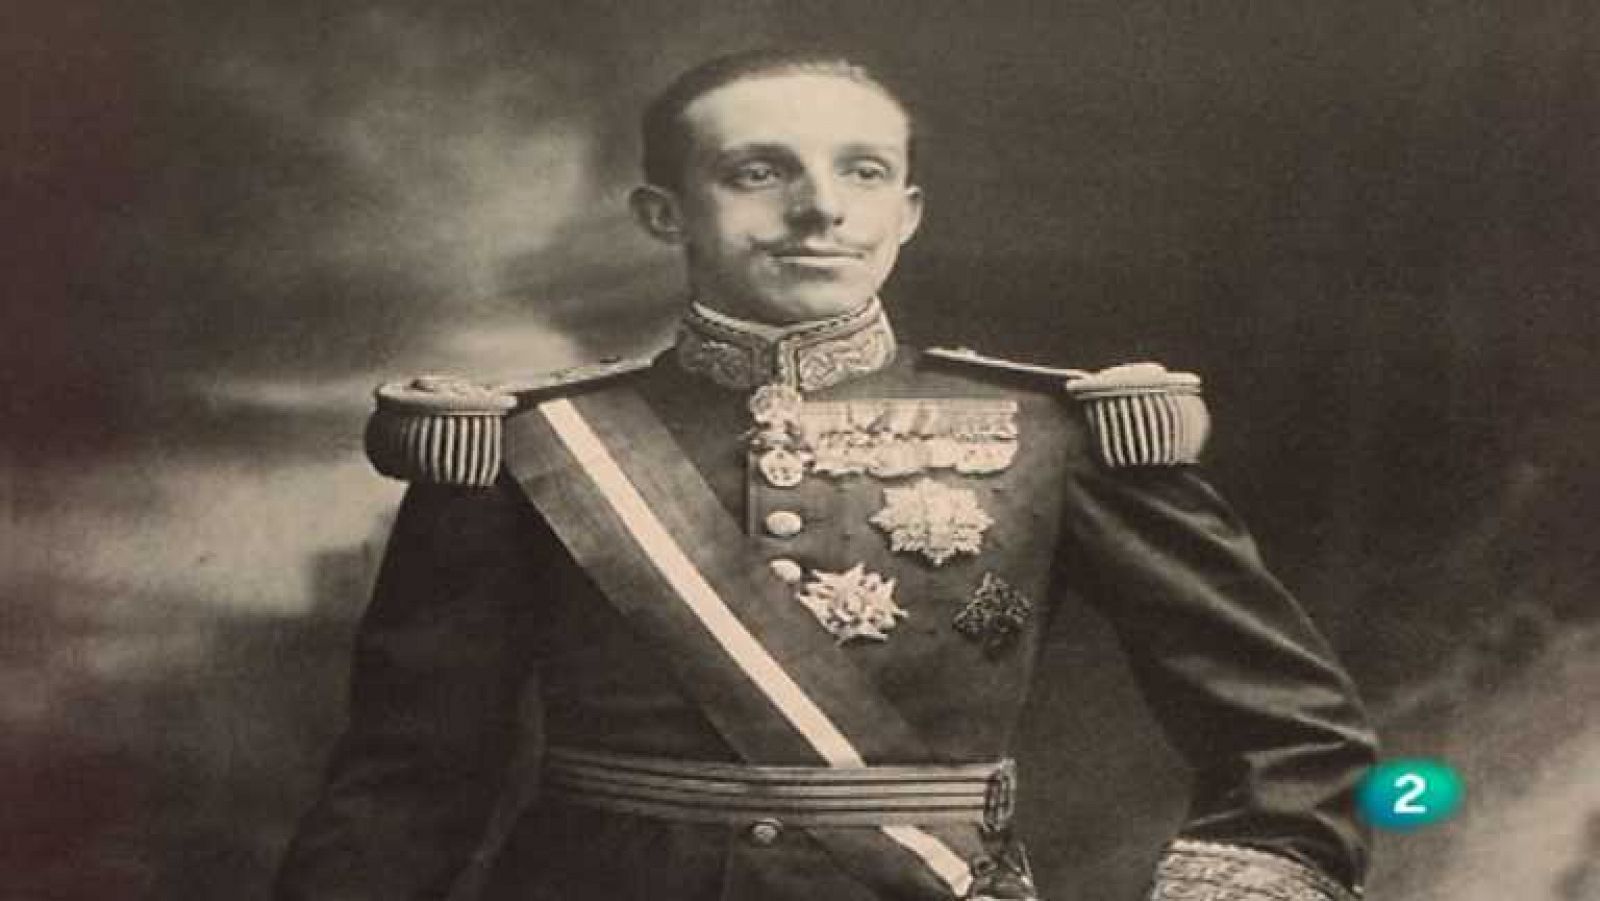 Paisajes de la Historia - Alfonso XIII, redentor de cautivos